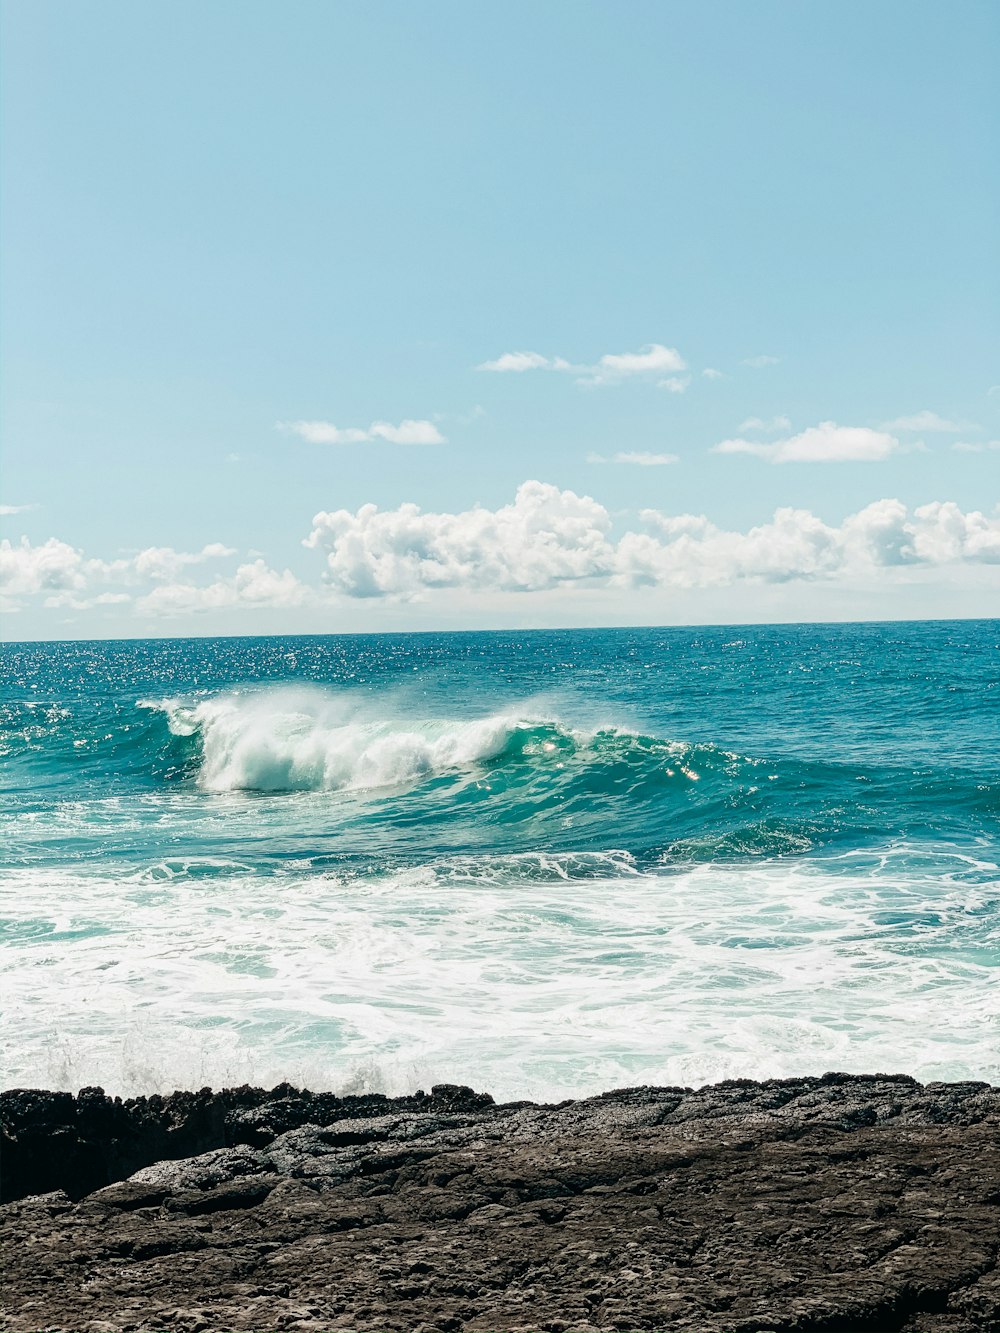 ondas do oceano batendo na costa rochosa durante o dia